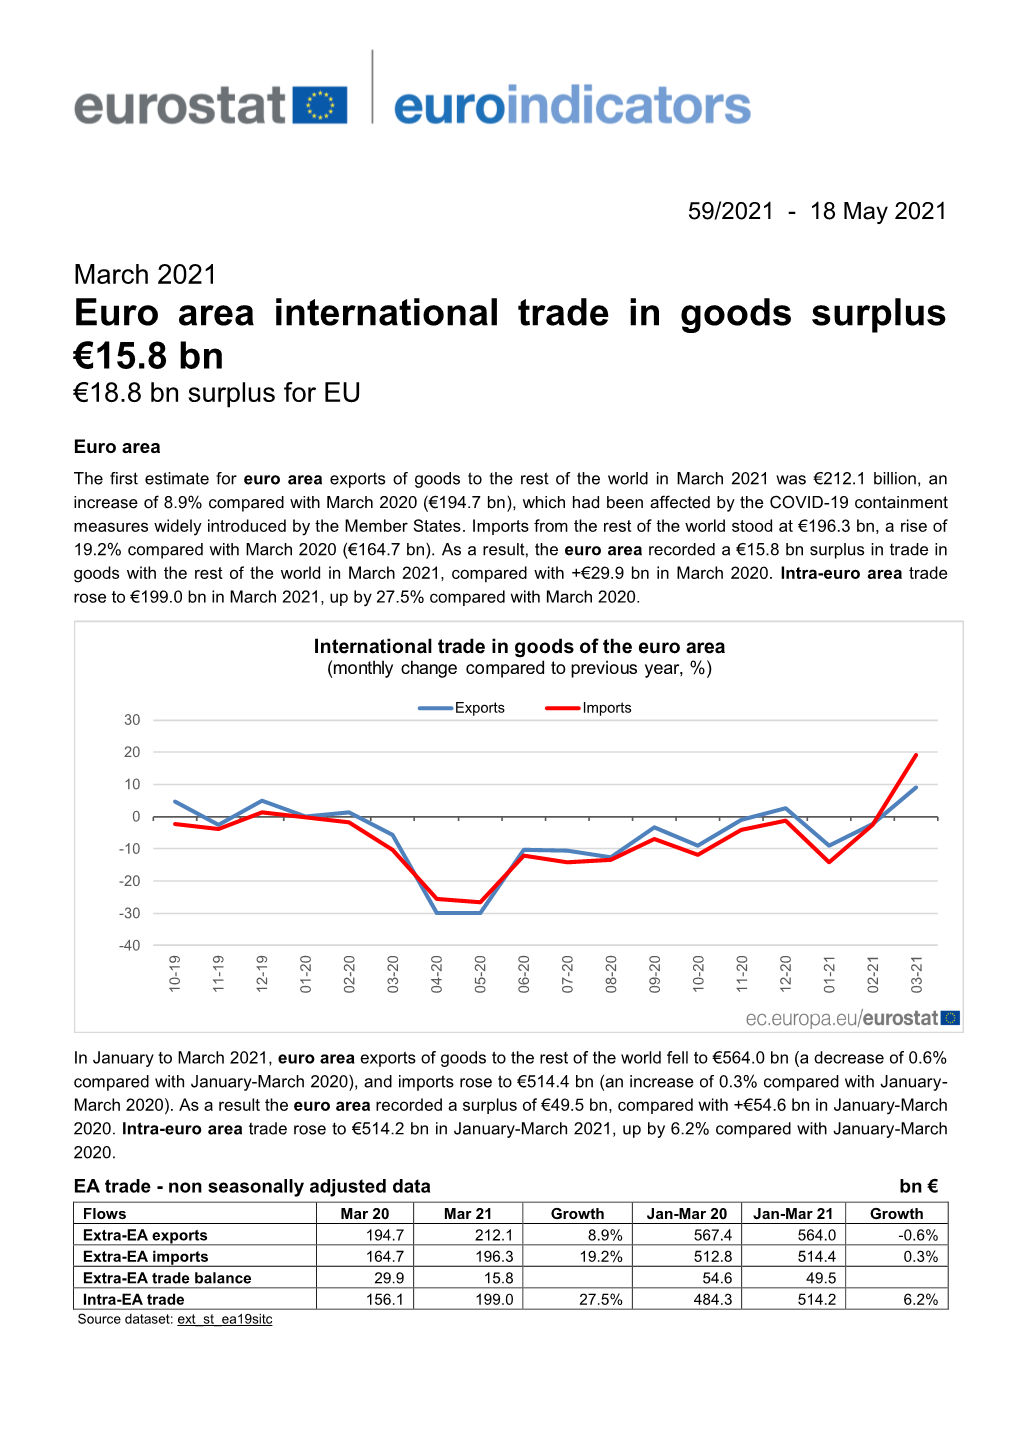 Euro Area International Trade in Goods Surplus €15.8 Bn in March 2021